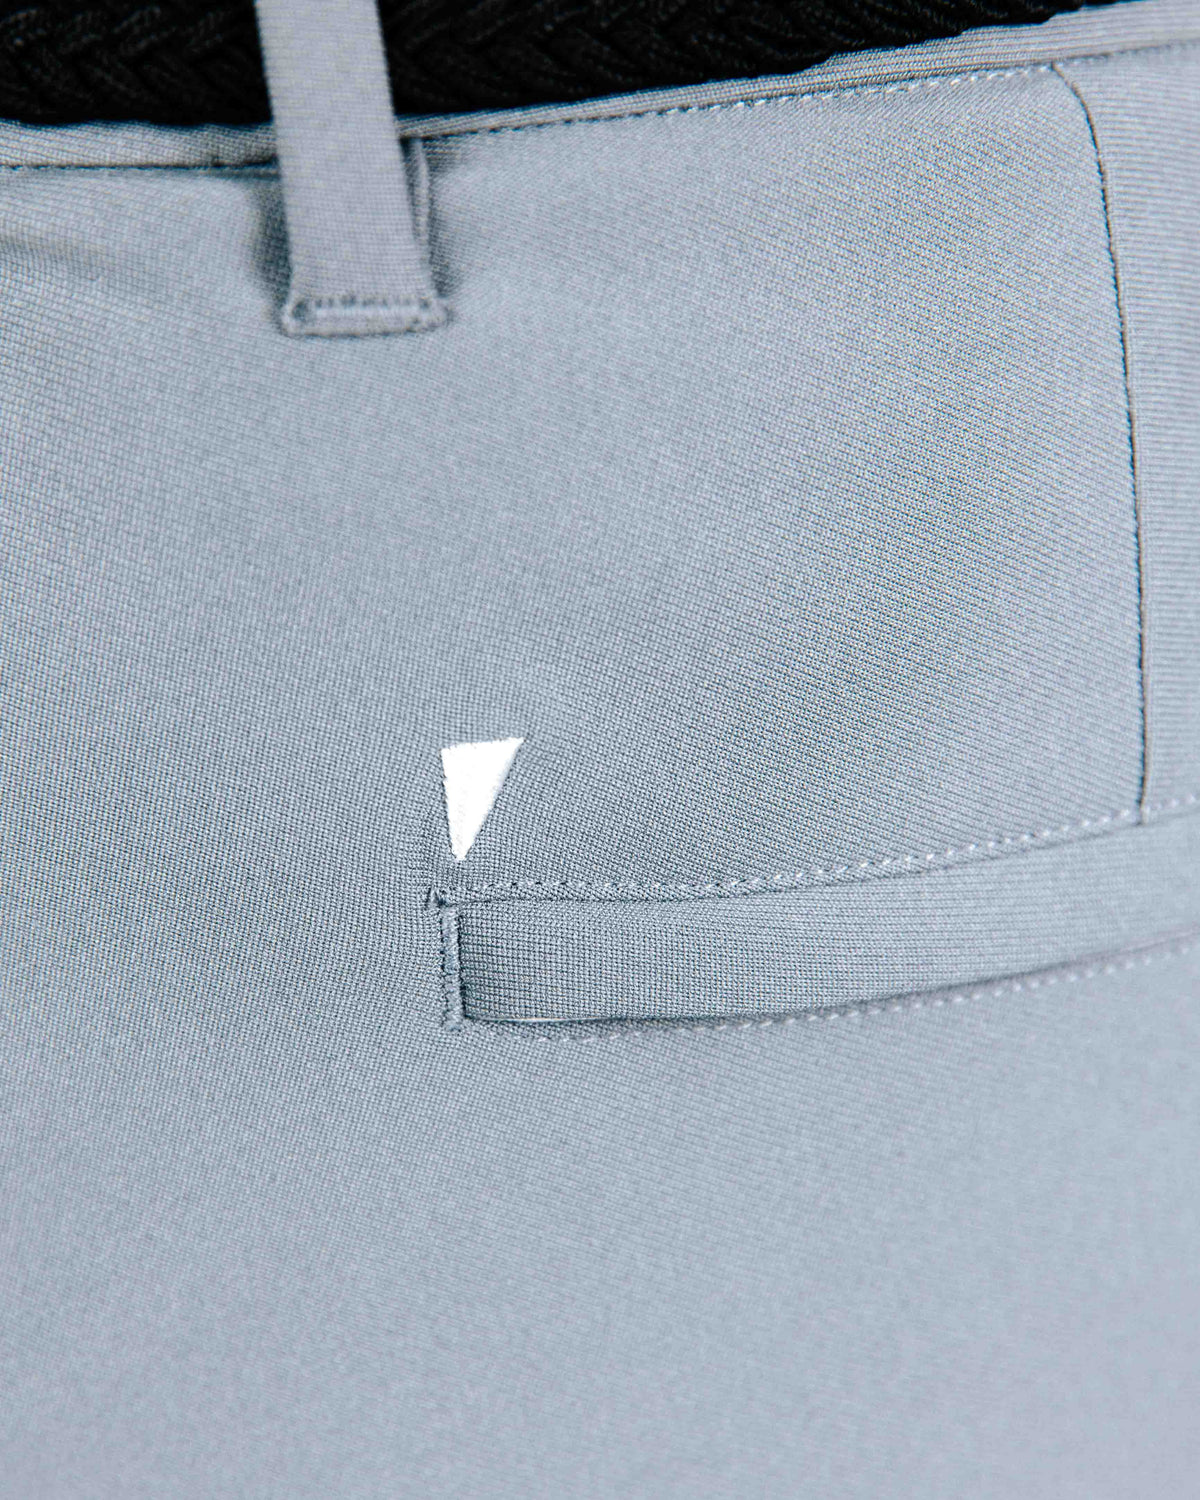 Primo Golf Traditional Pant - Light Gray Primo flag above left back pocket